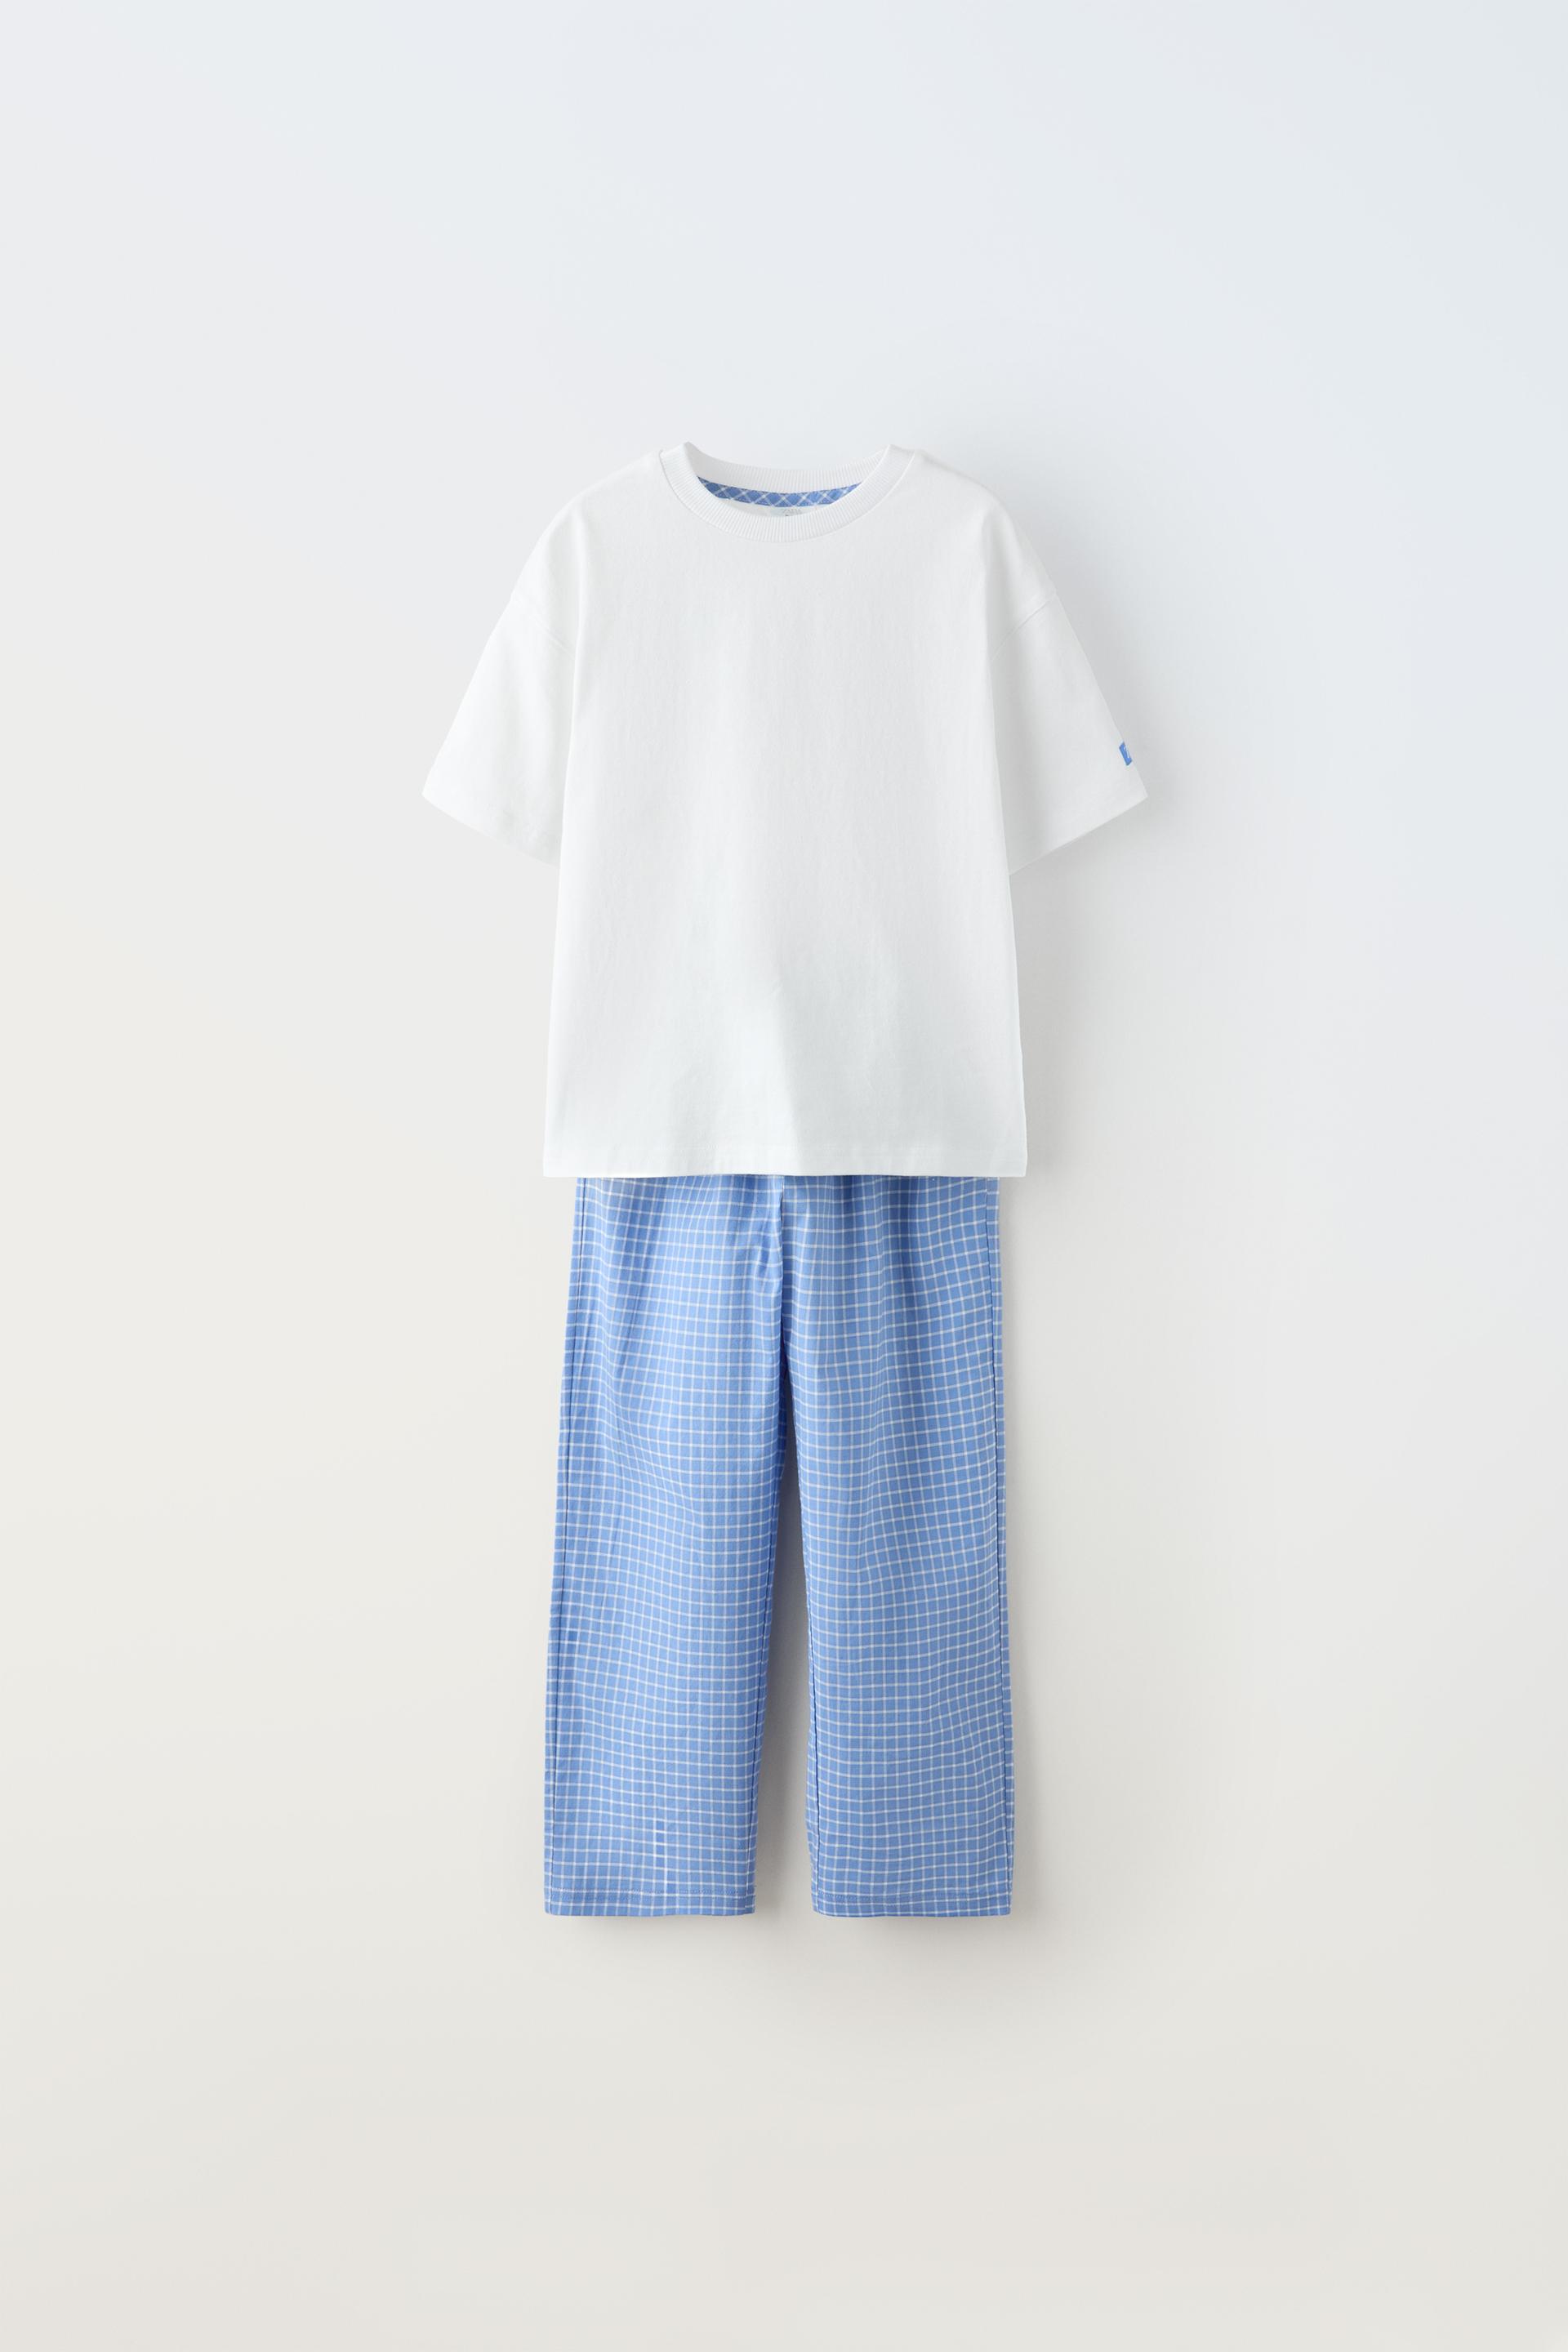 Zara pajama set  Pajama set, Clothes design, Zara